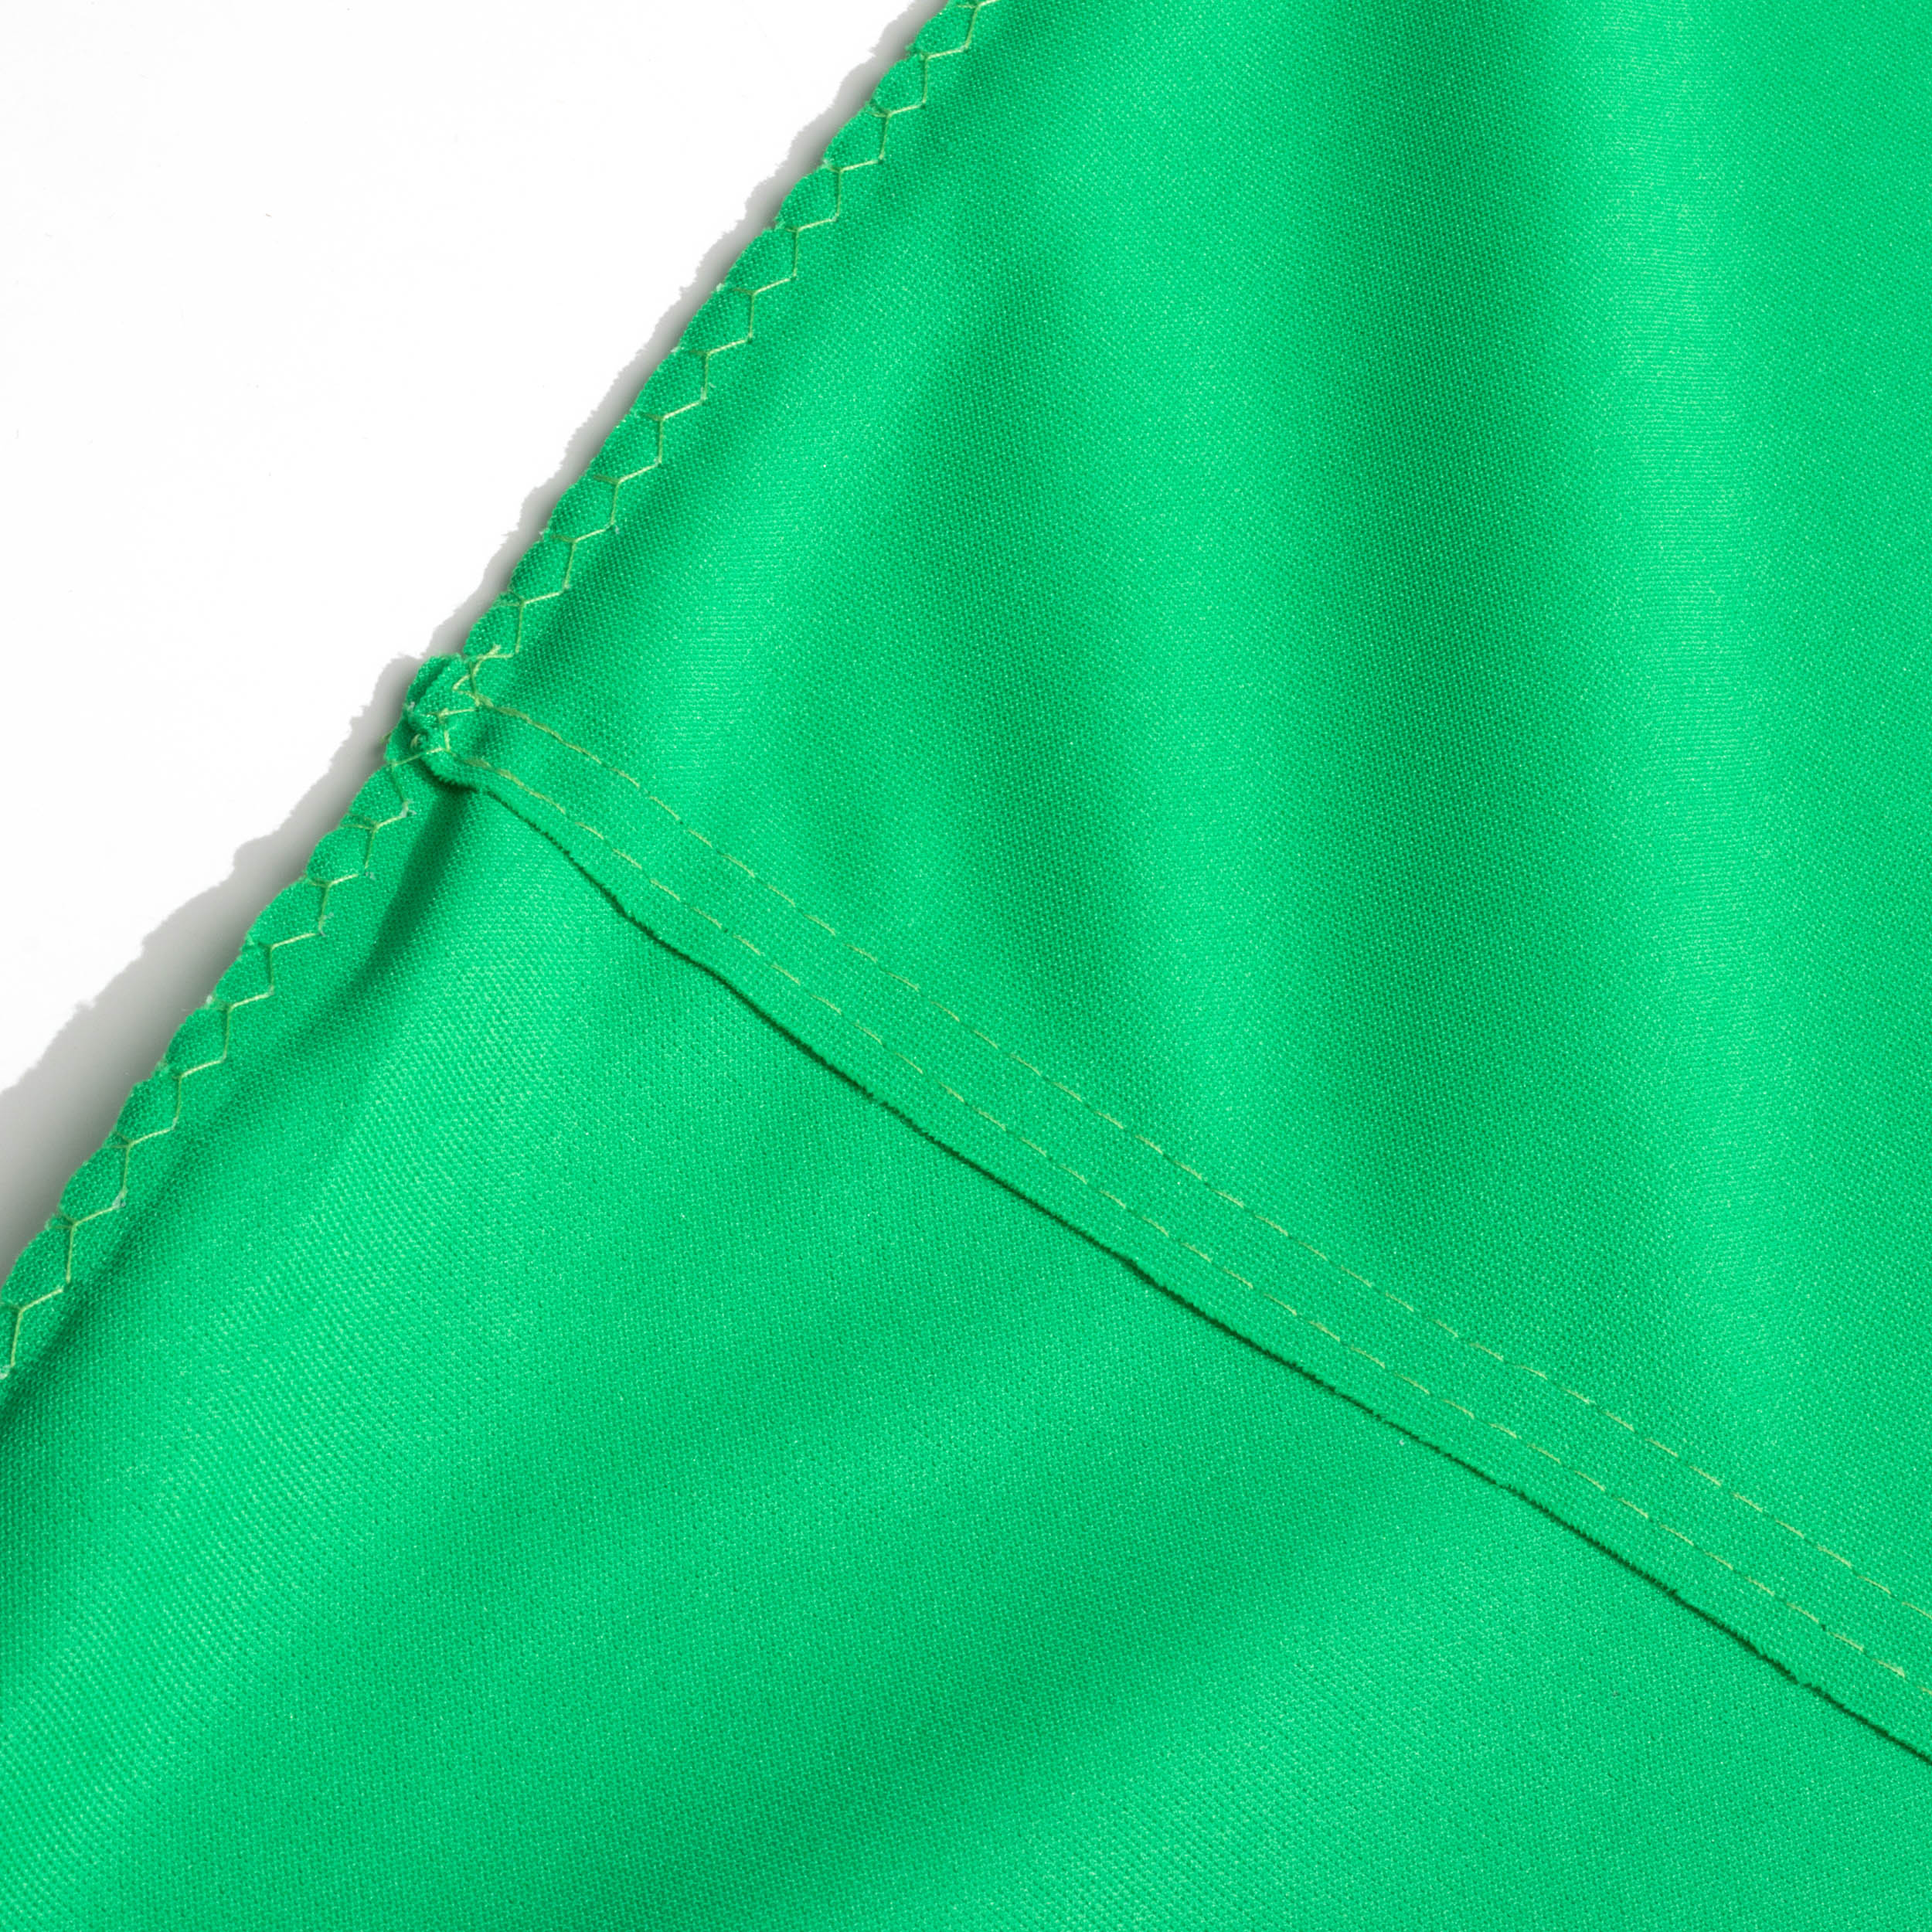 Easiframe Curved L-Shaped Chroma Key Green Wall Backdrop